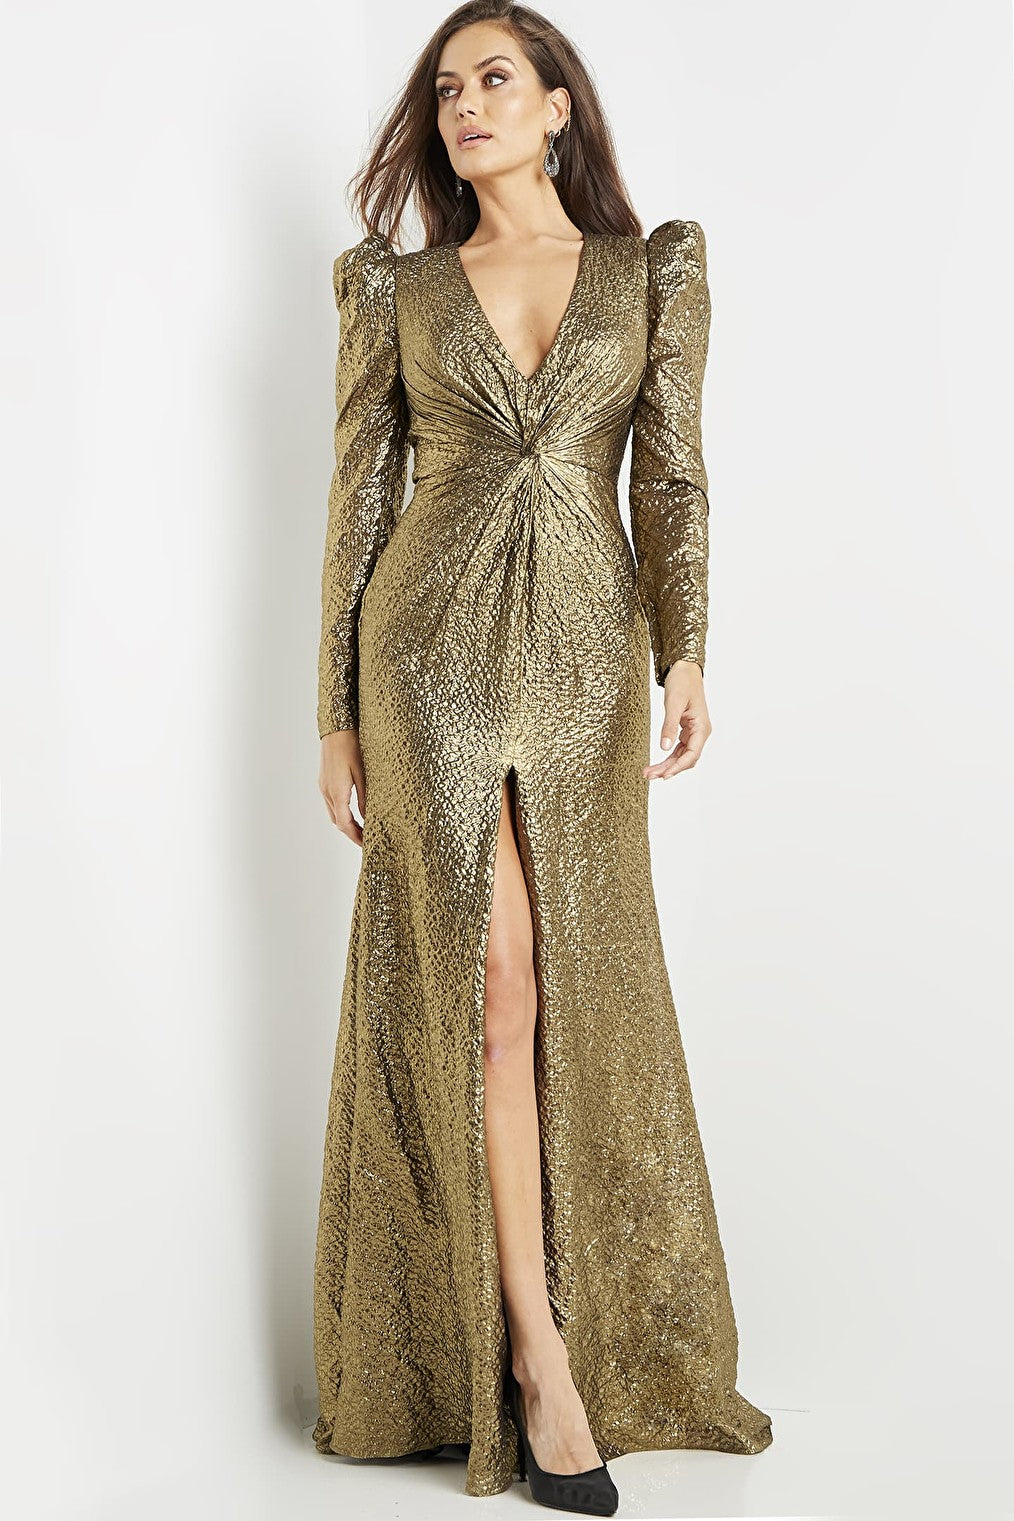 gold v neckline dress 09439